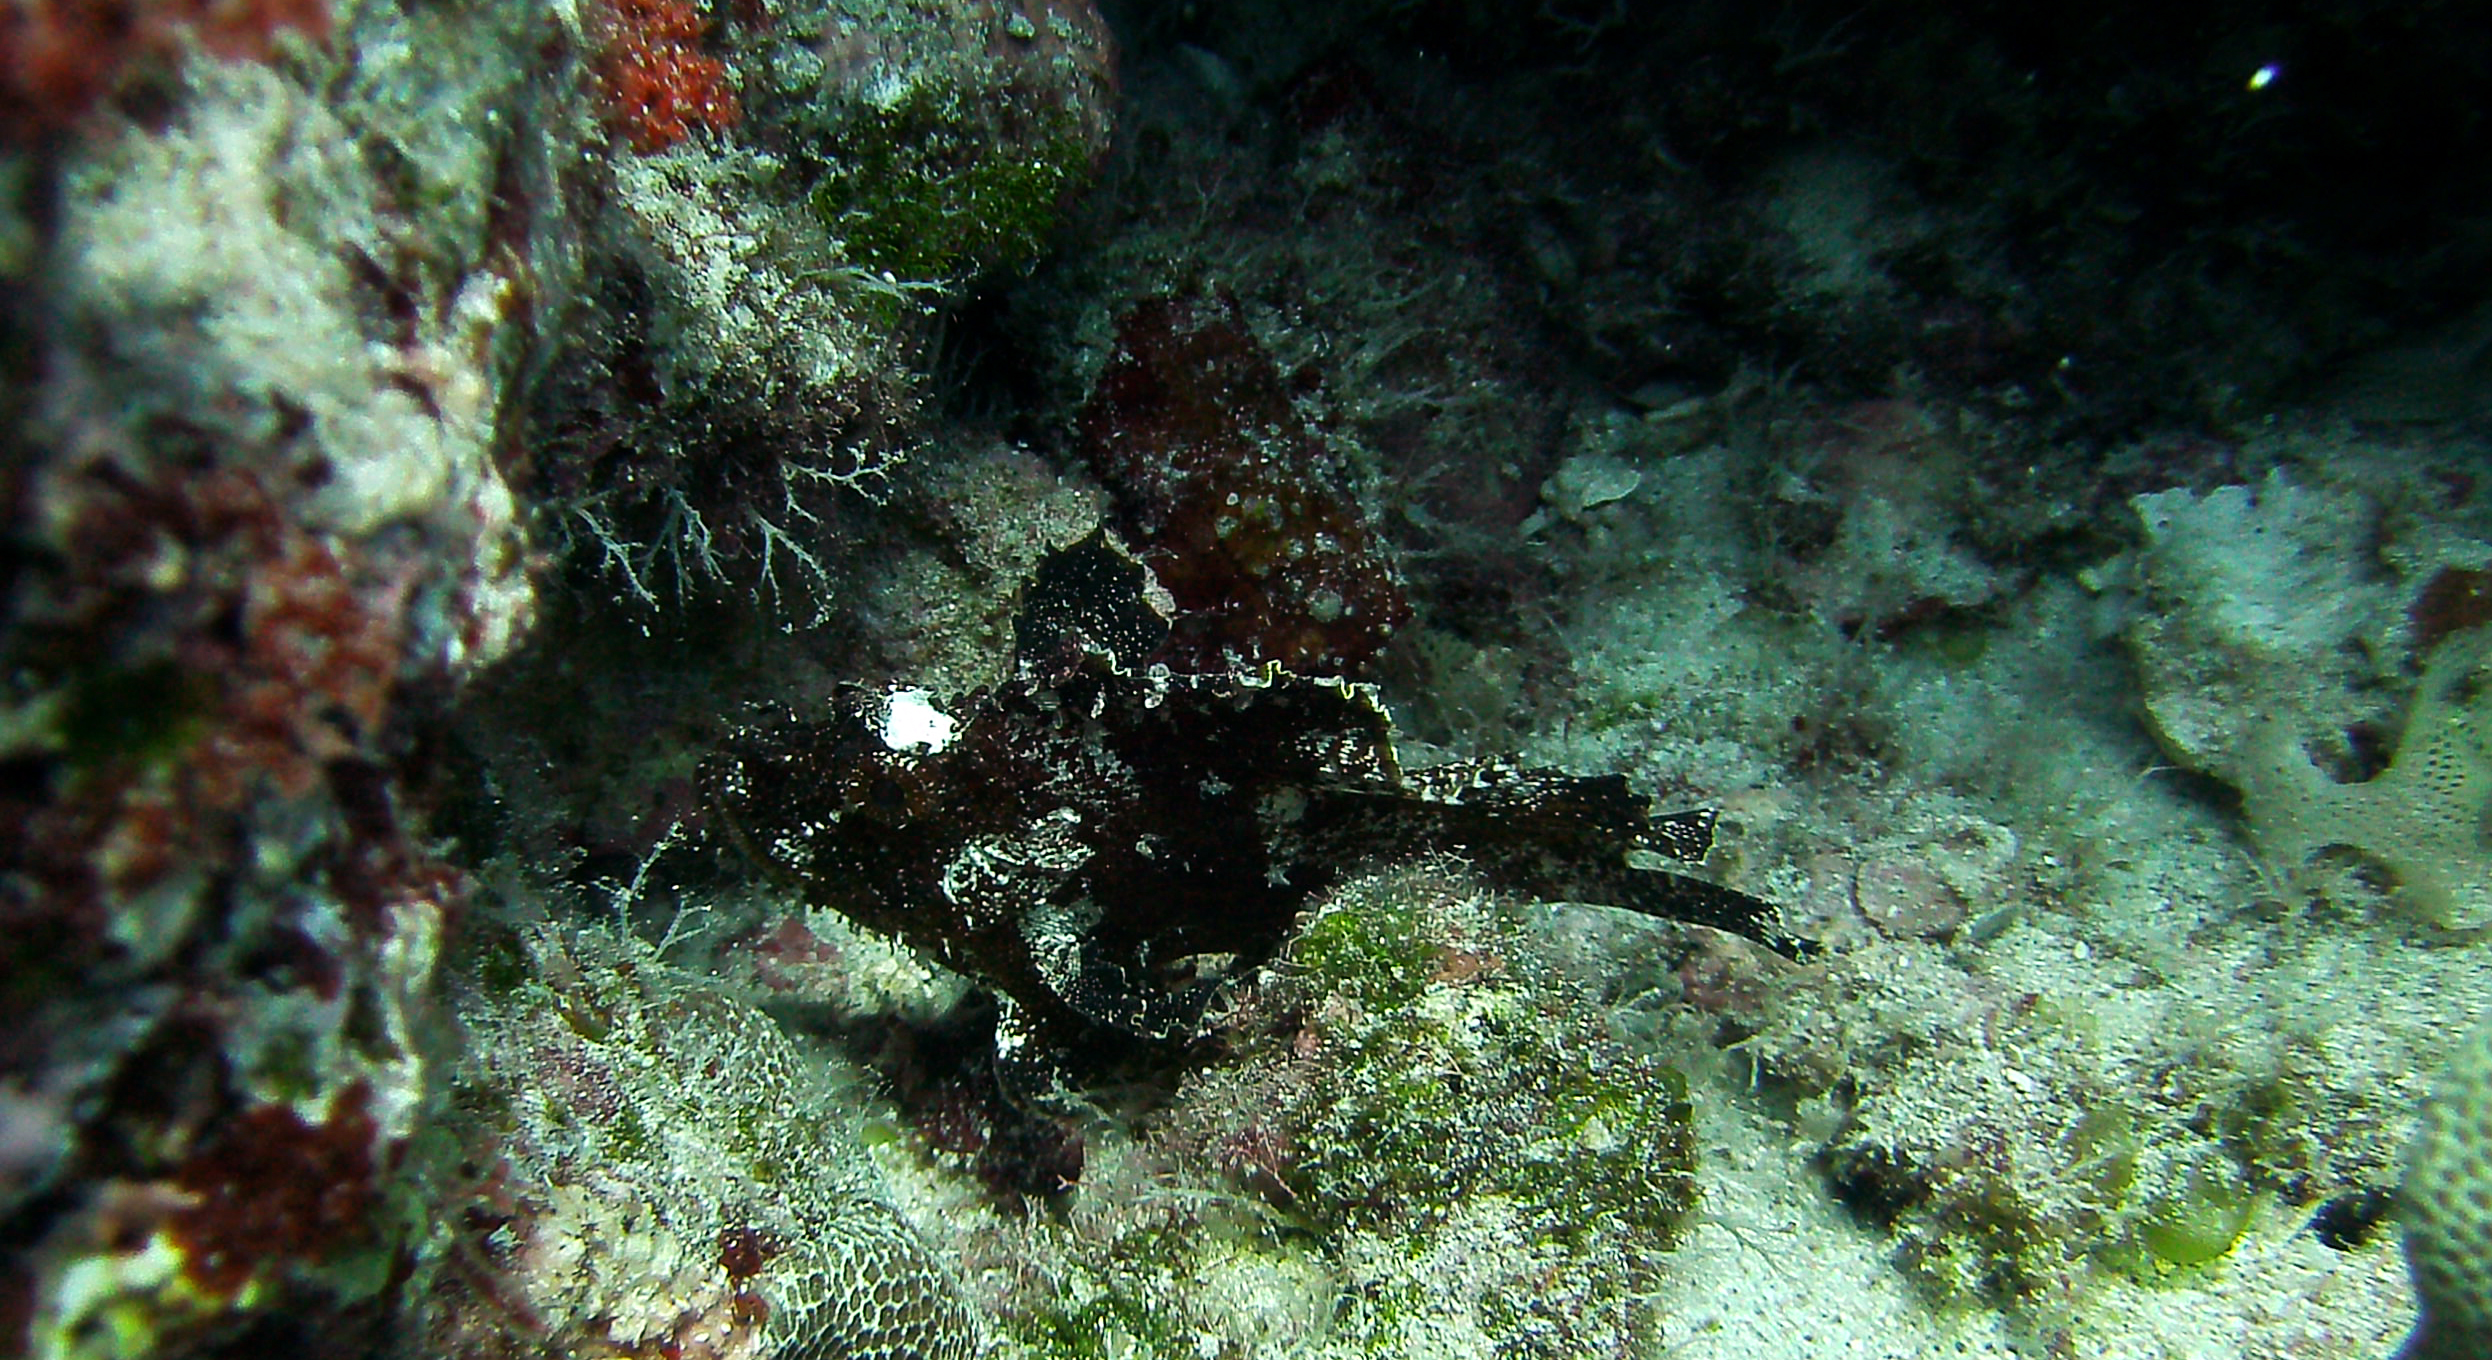 Leafy Scorpion Fish